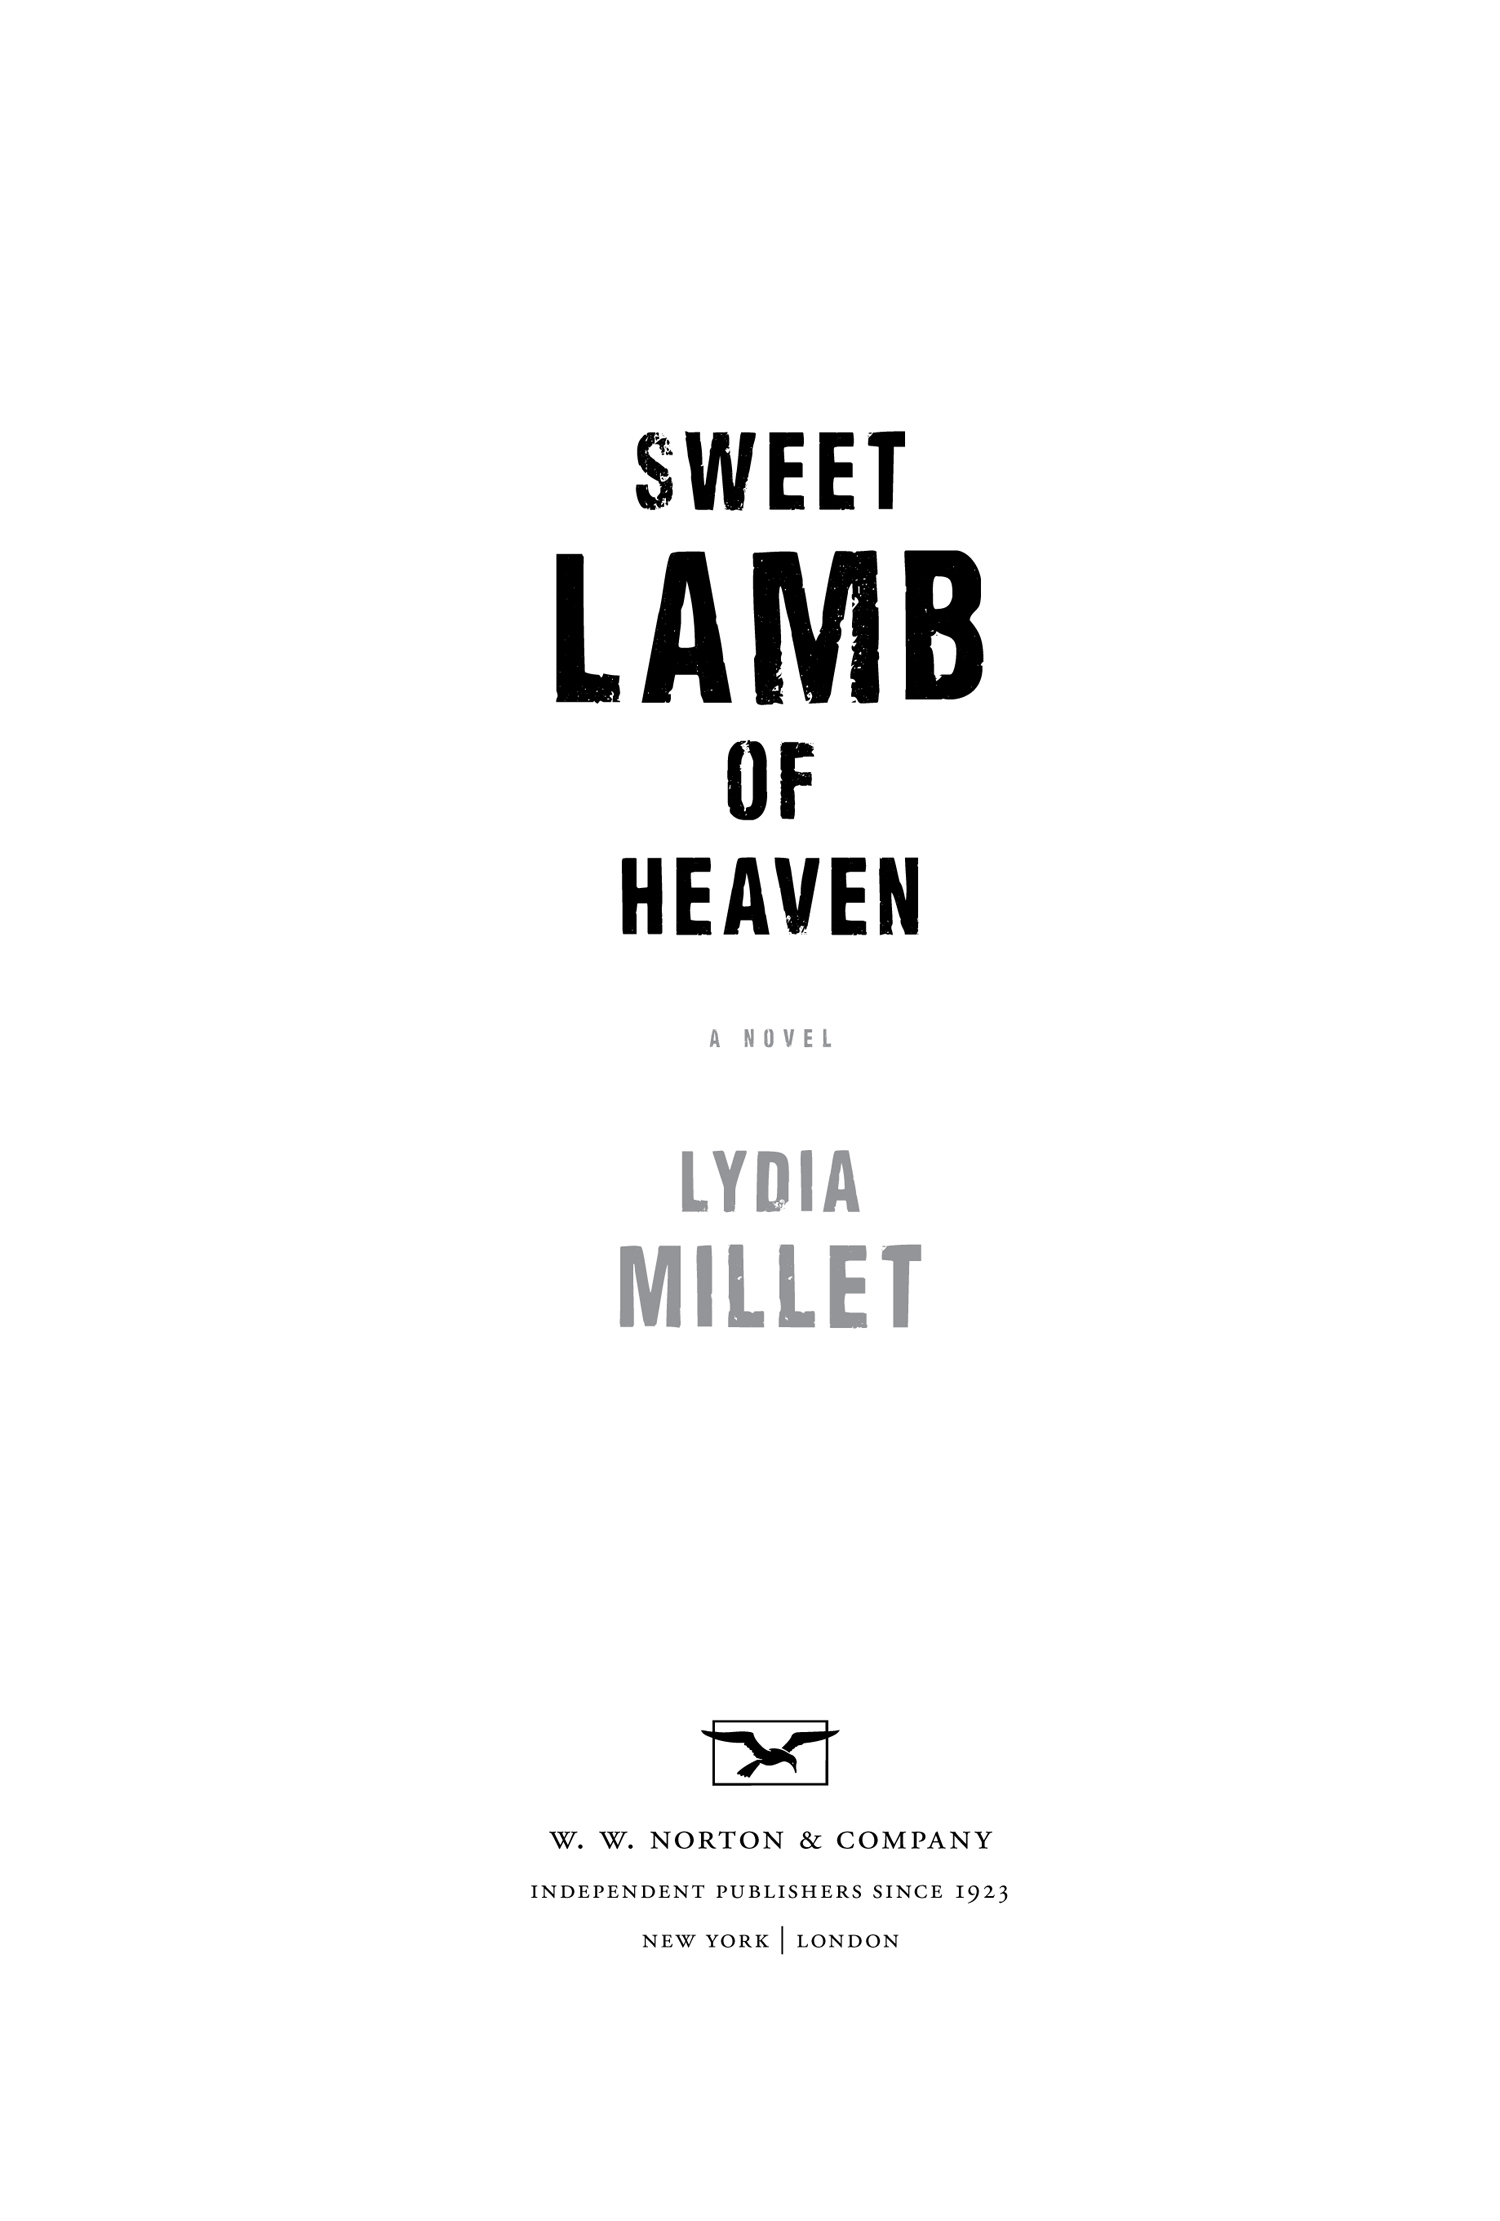 Sweet Lamb of Heaven by Lydia Millet